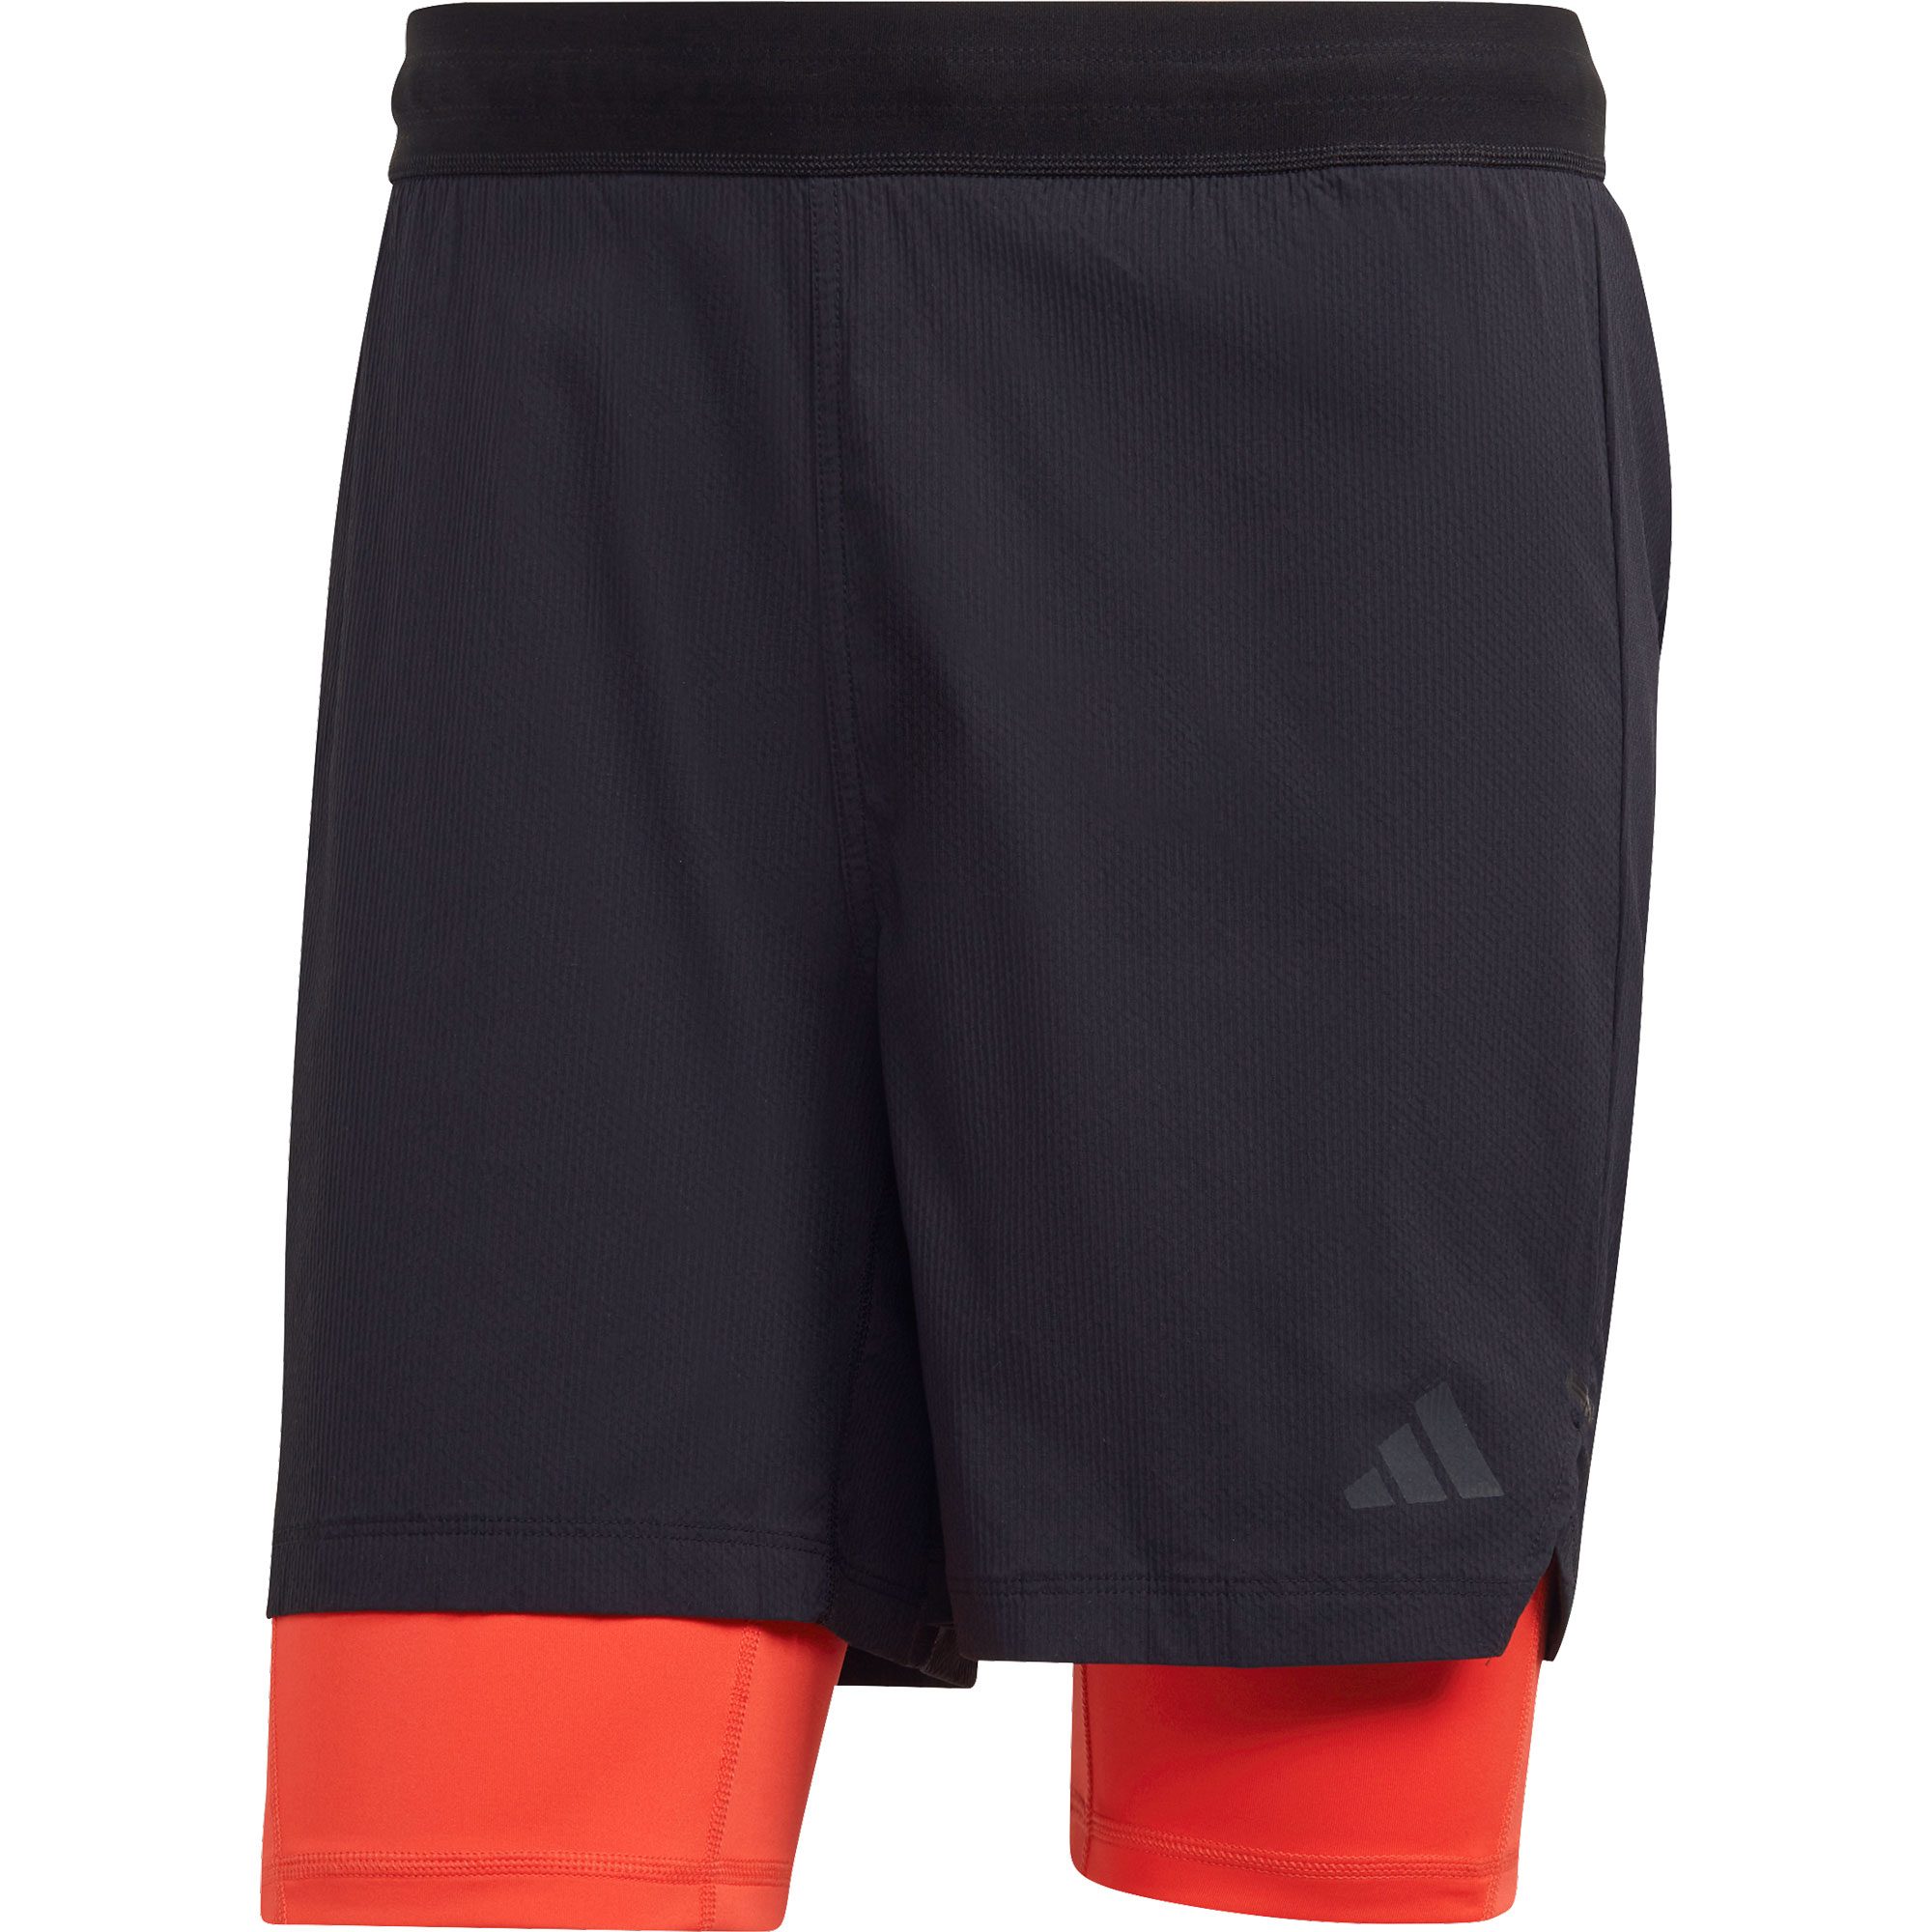 adidas Power Workout Shorts - Black